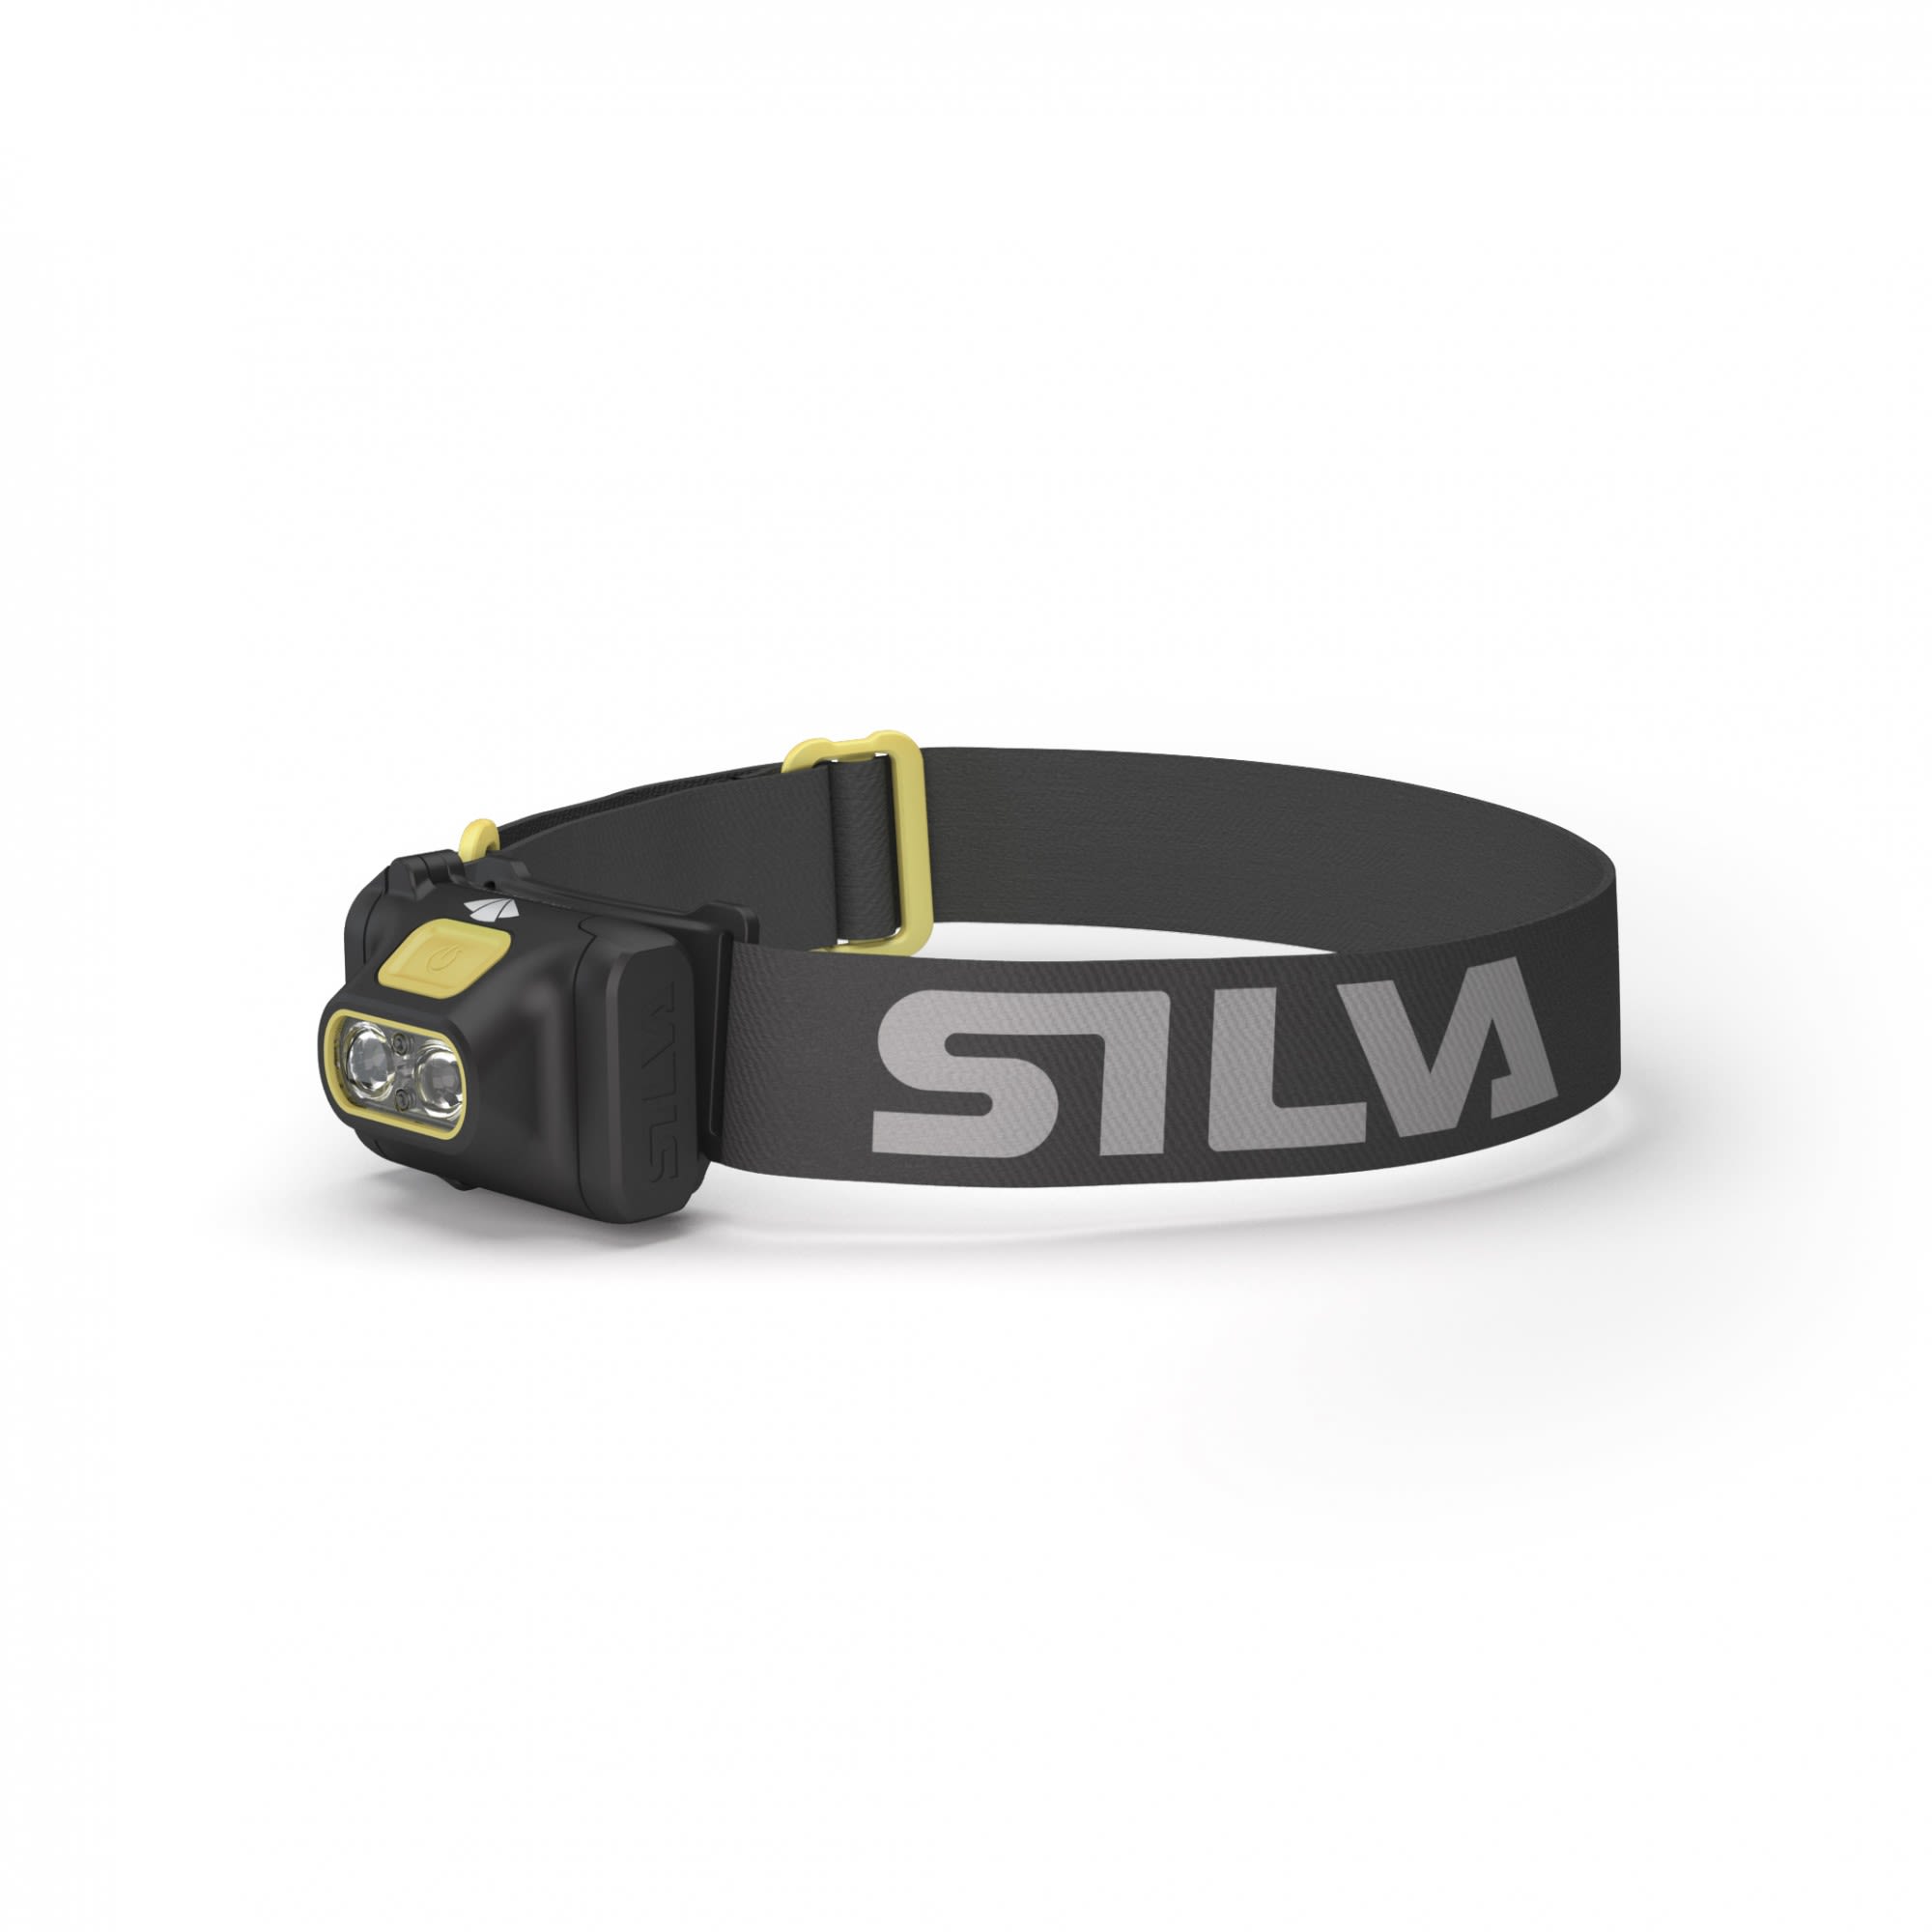 Silva Scout 3 Schwarz- Stirnlampen- Grsse One Size - Farbe Black - Yellow